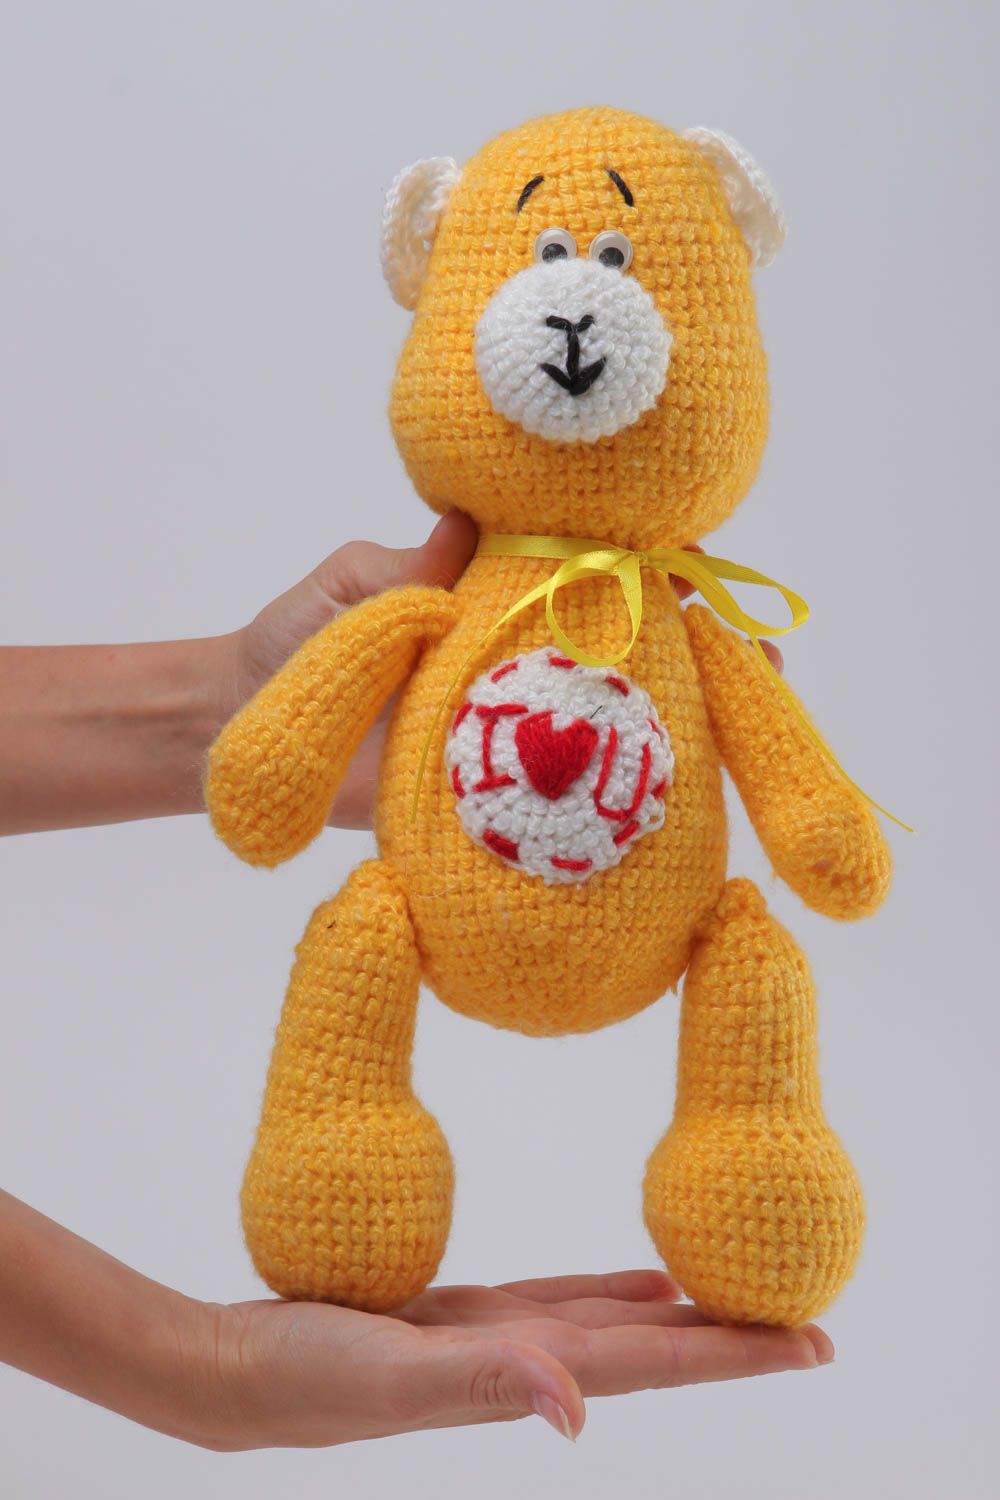 Cute handmade soft toy crochet toy nursery design interior decorating ideas photo 5